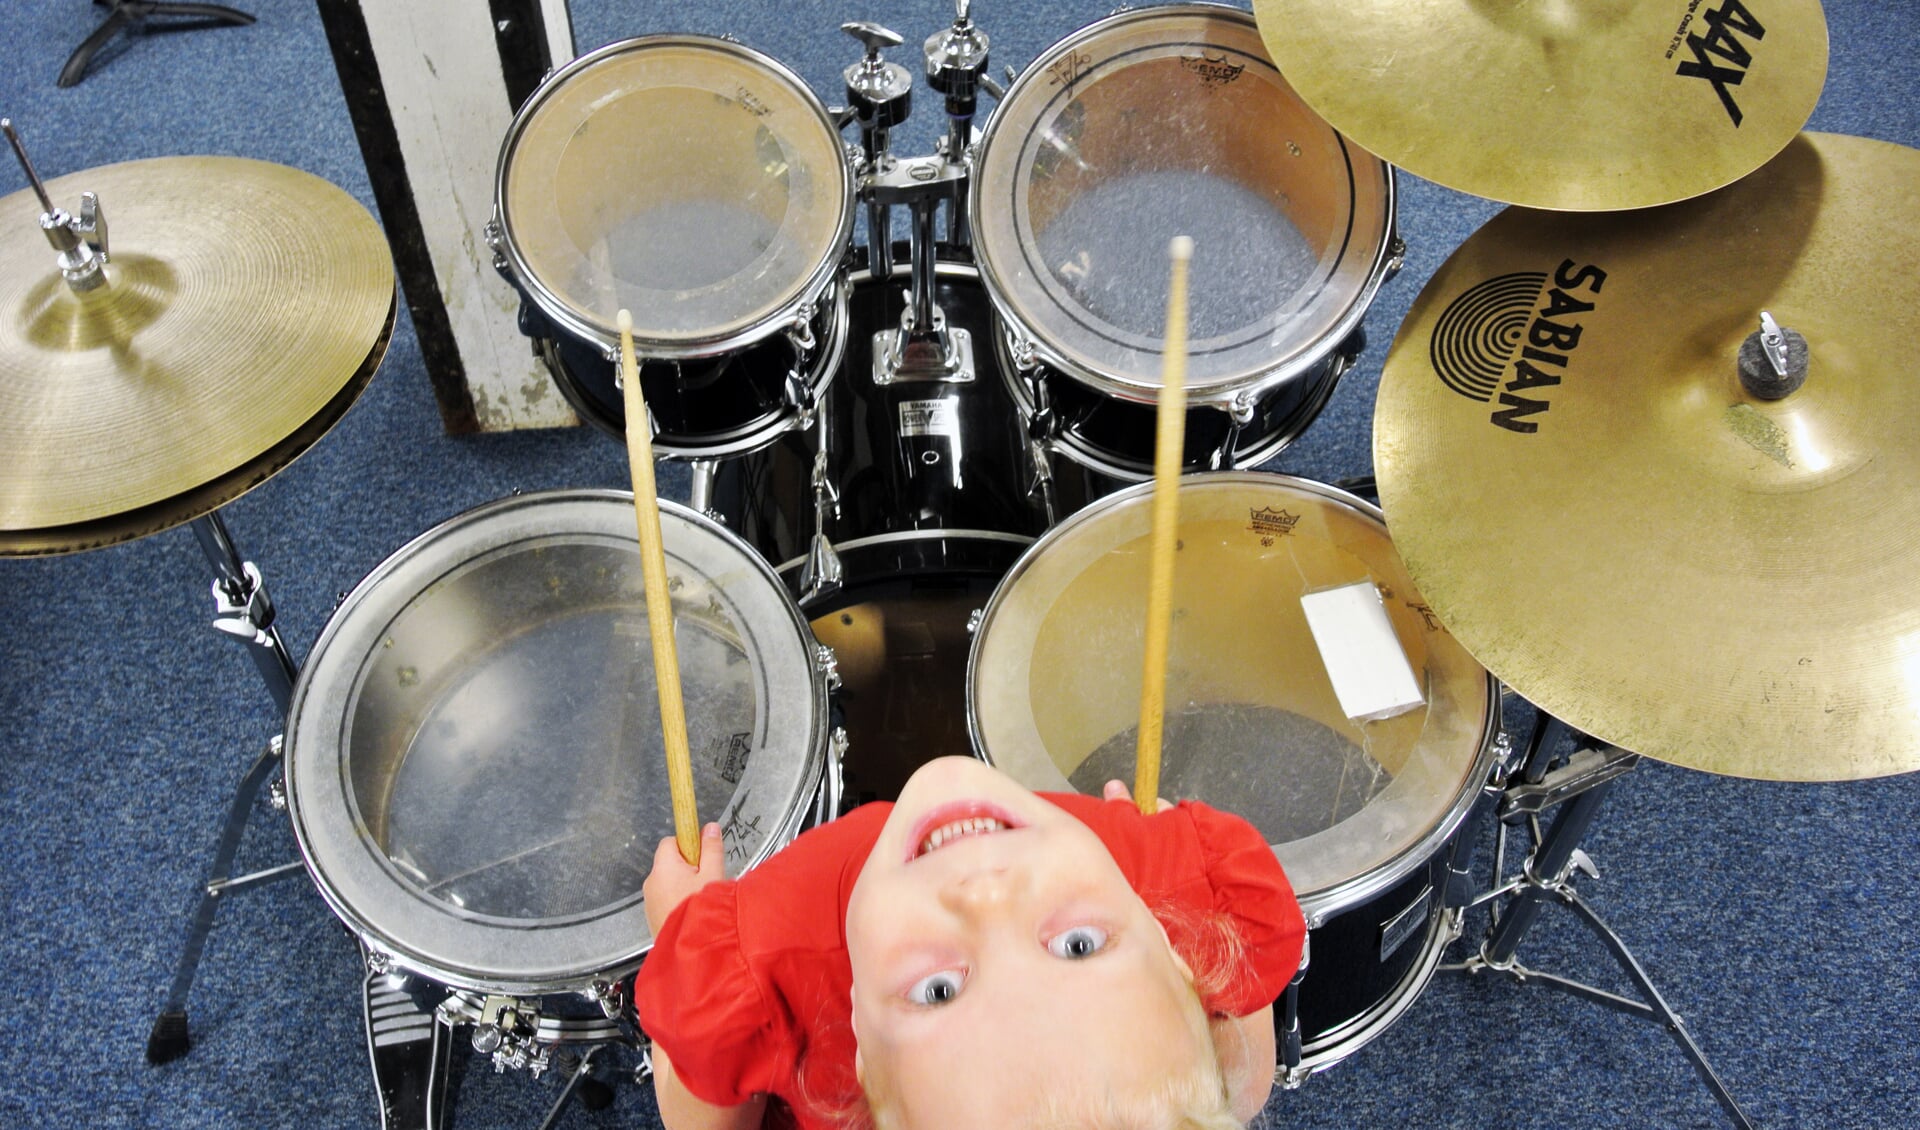 Dit jonge talent vindt drummen leuk.